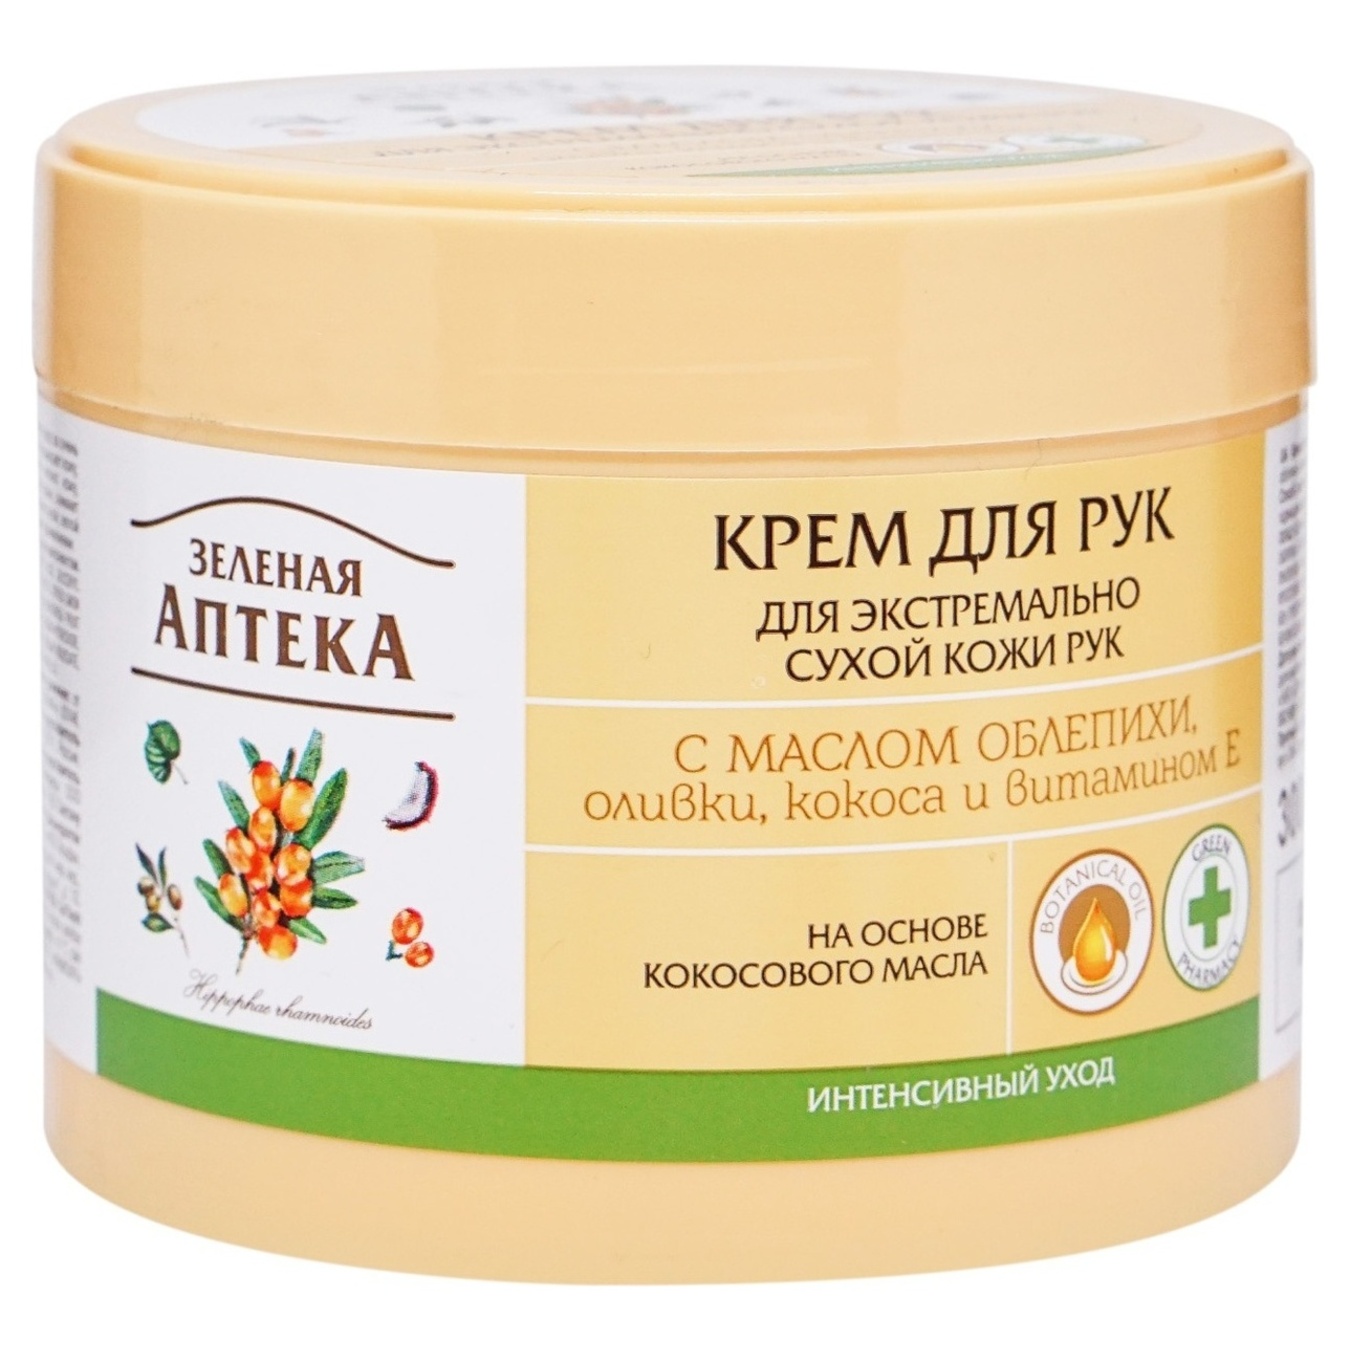 Zelena Apteka Extra hand cream for dry skin 300ml